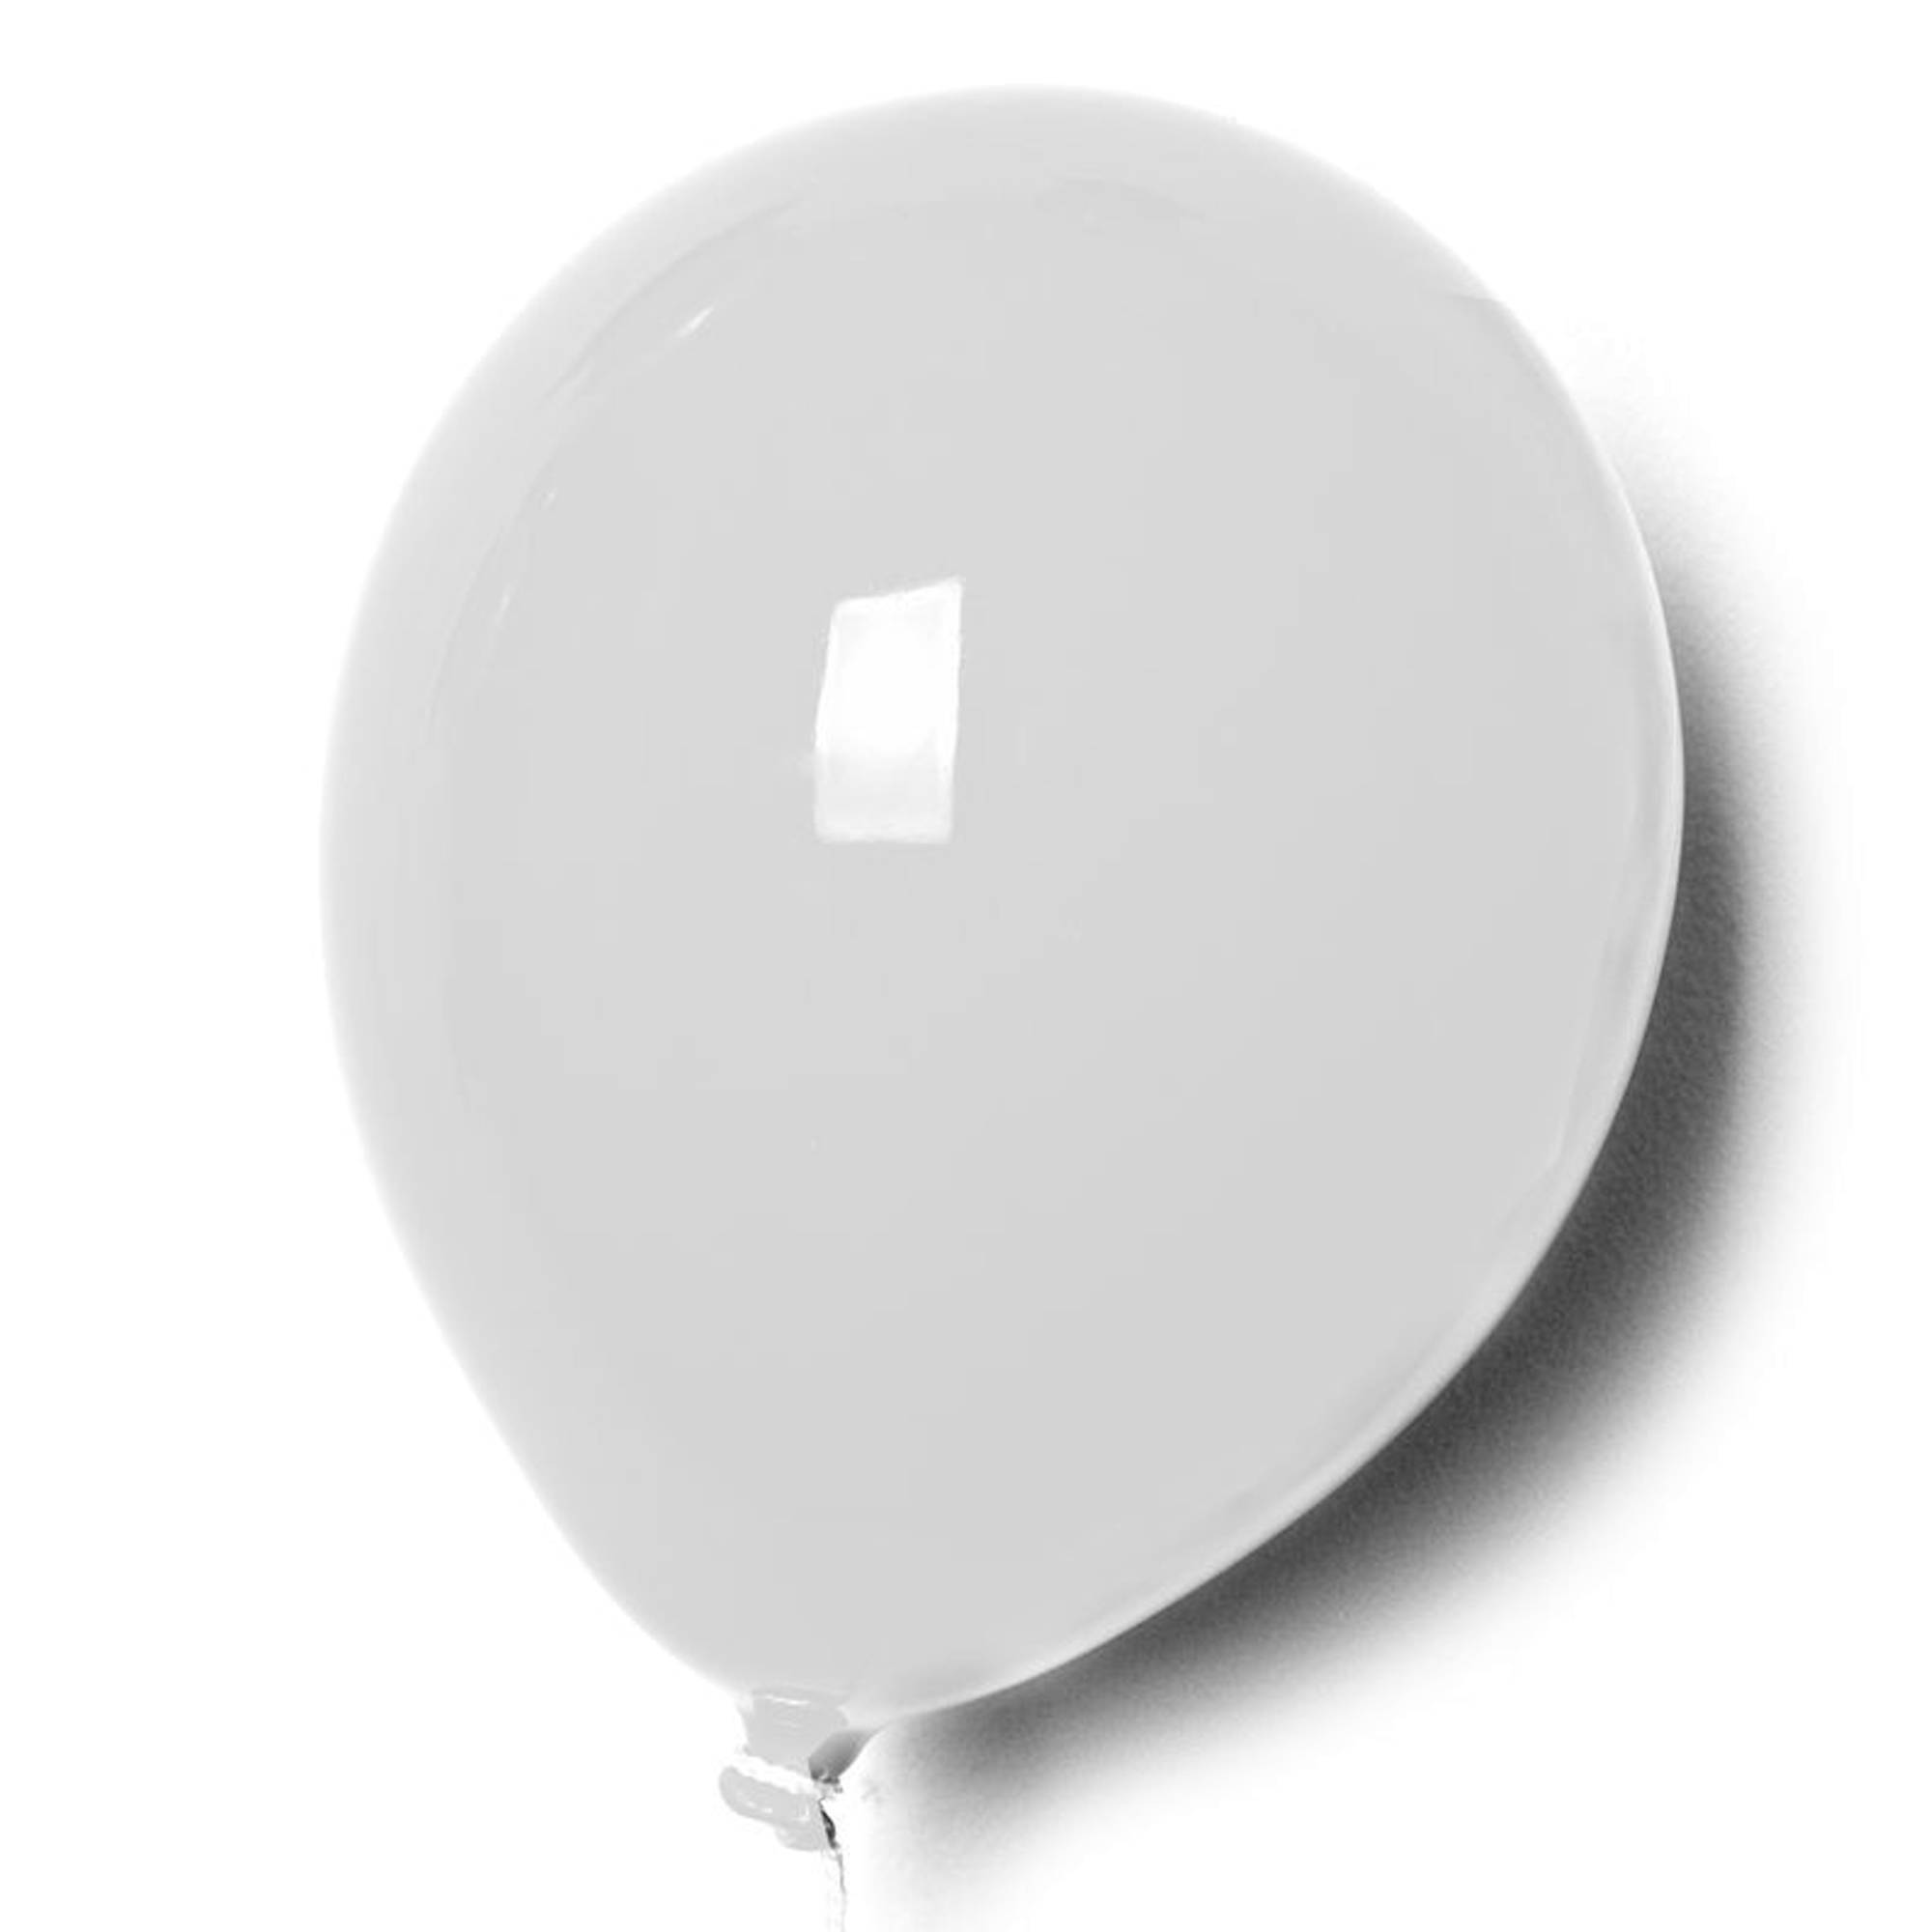 https://www.bowigo.fr/85800-thickbox_default/creativando-ballons-objet-decoratif-murale-blanc.jpg